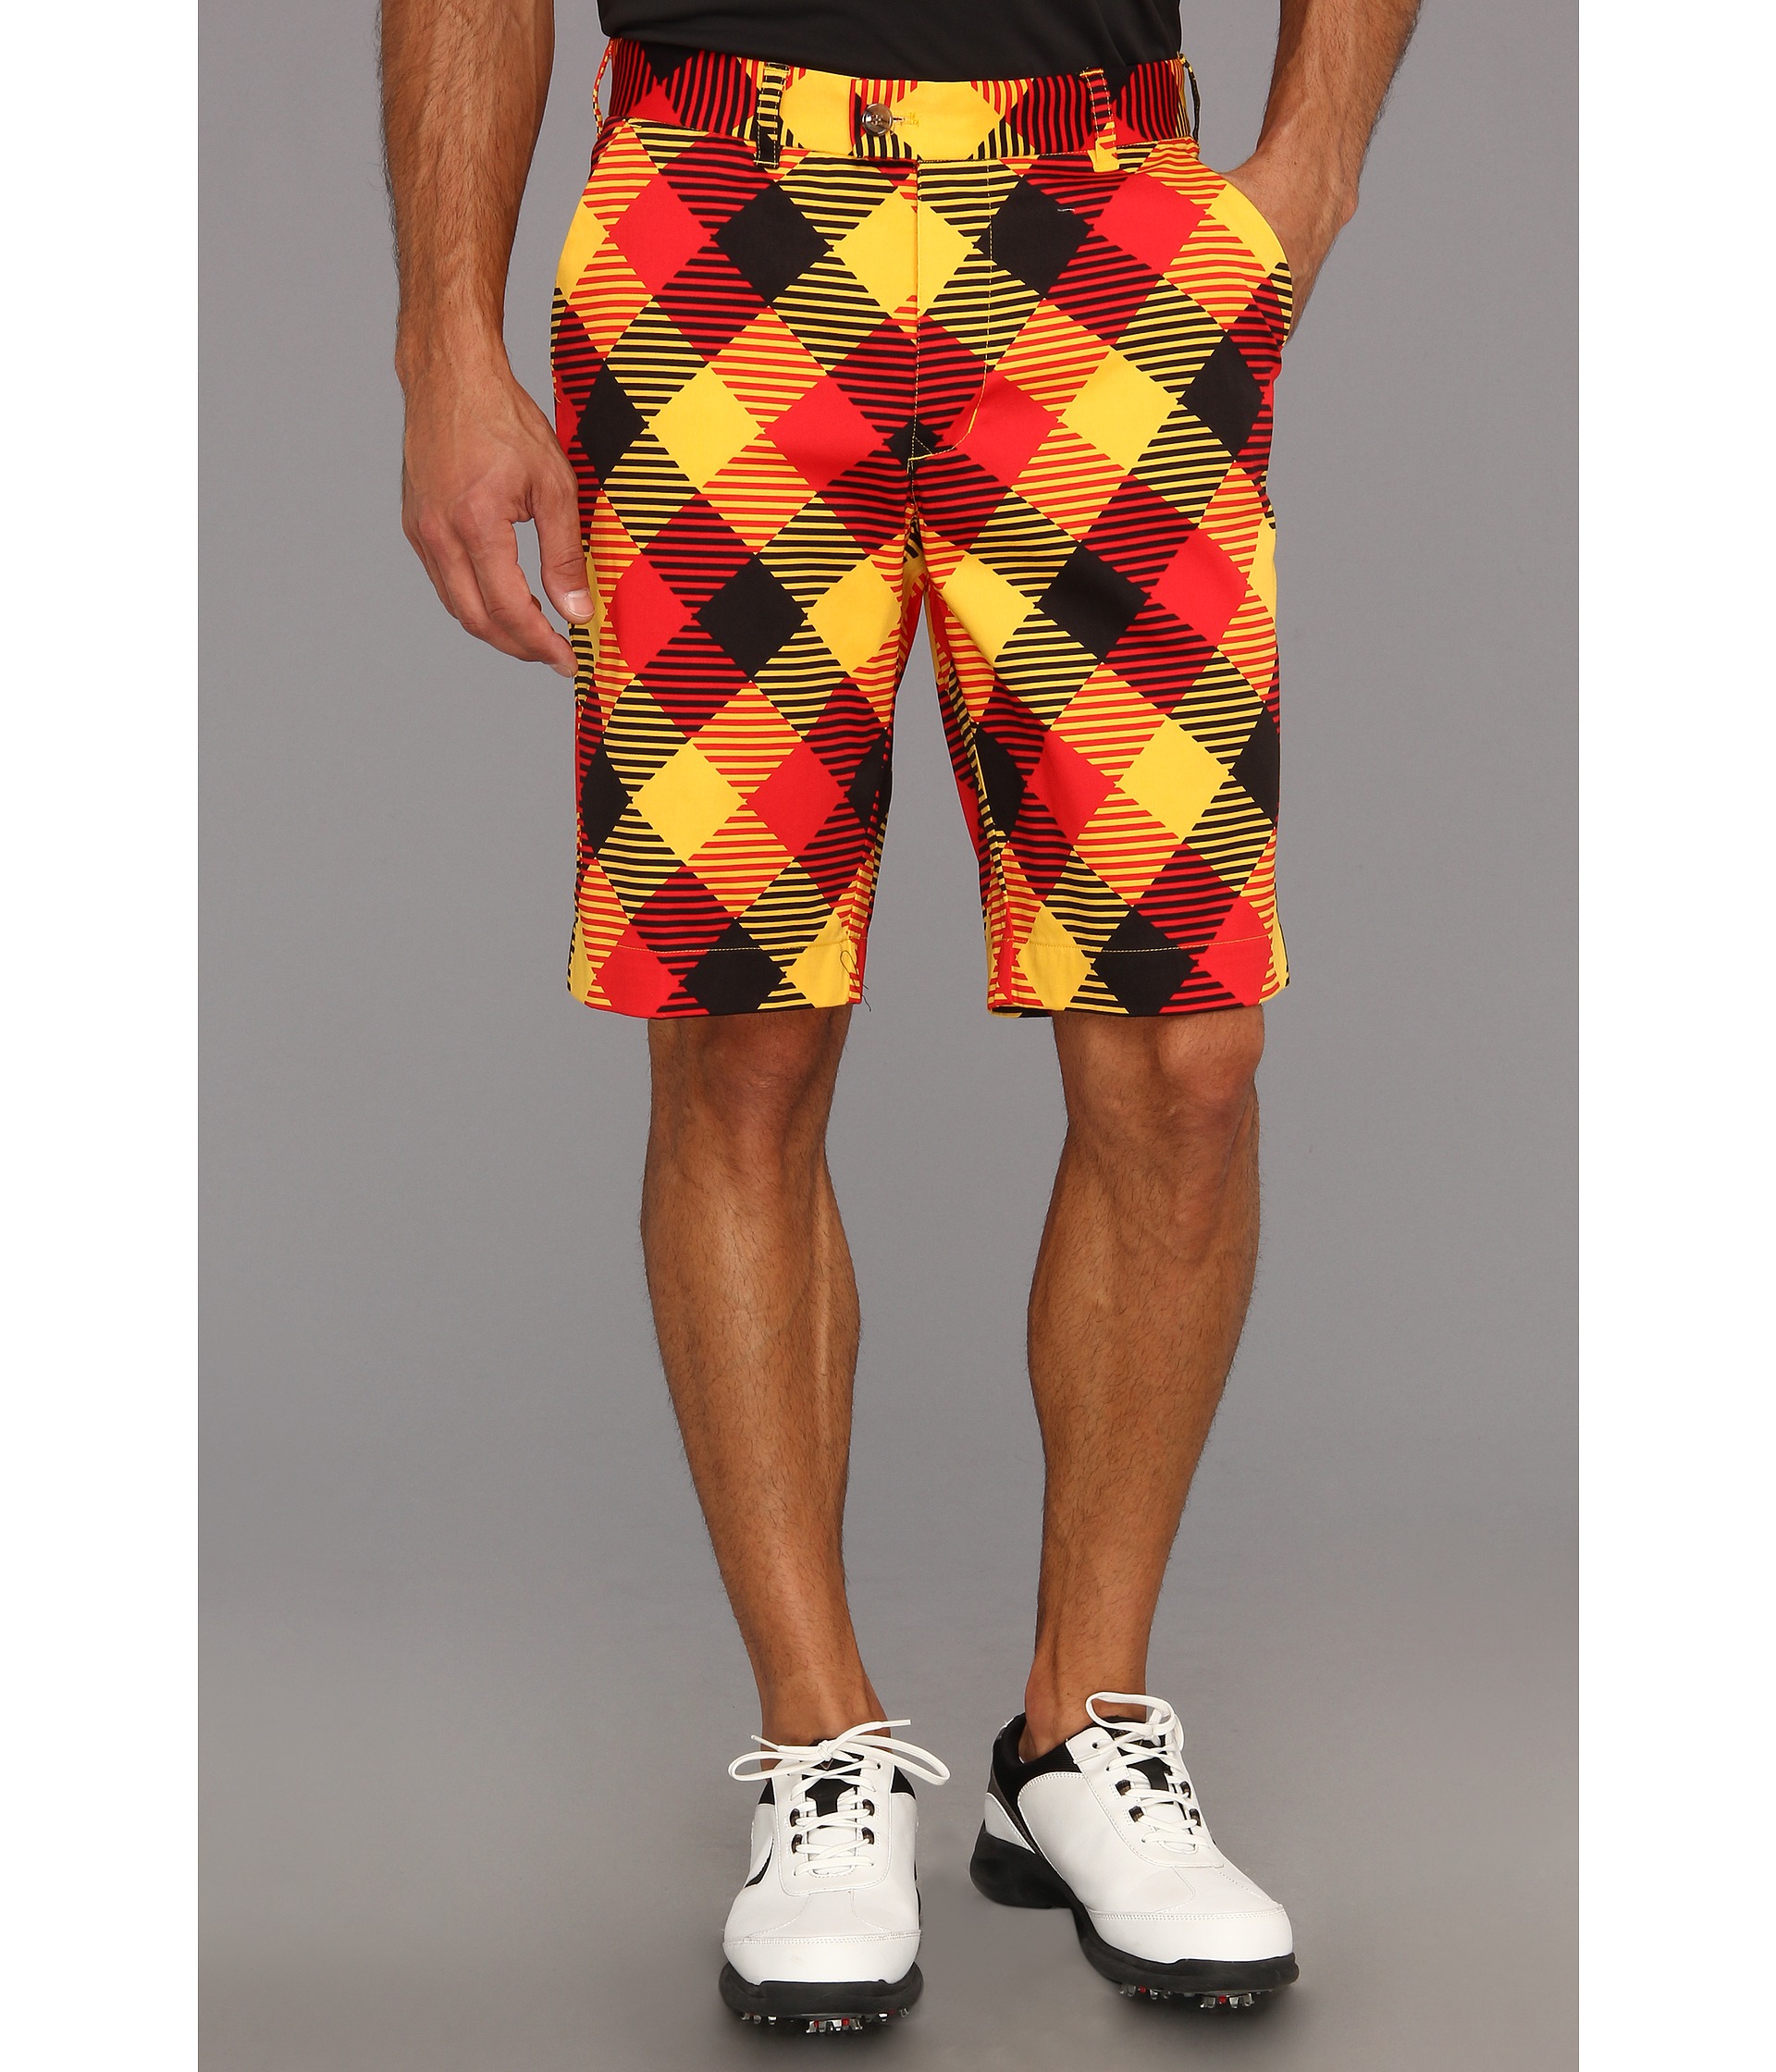 Loudmouth Golf Cheezburger Shorts Black Yellow Red Orange